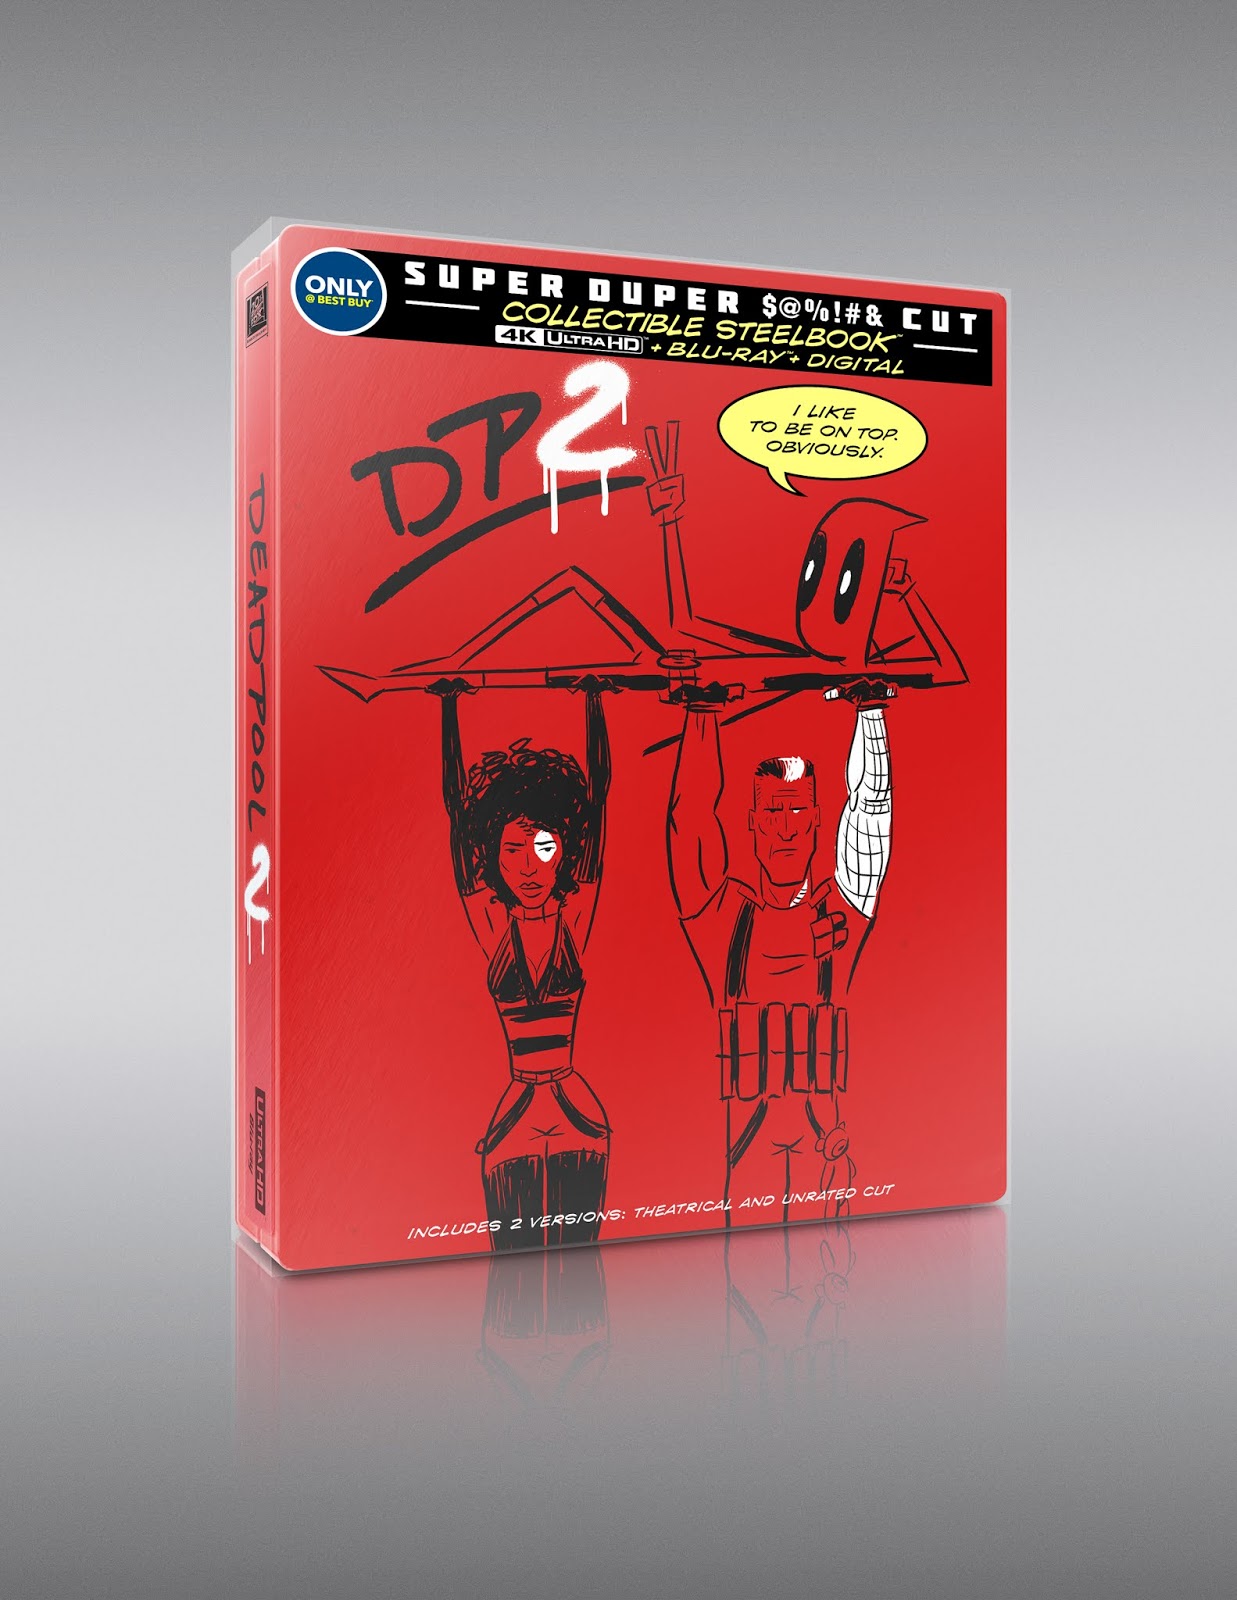 Deadpool 2 Super Duper At Cut On Digital August 7